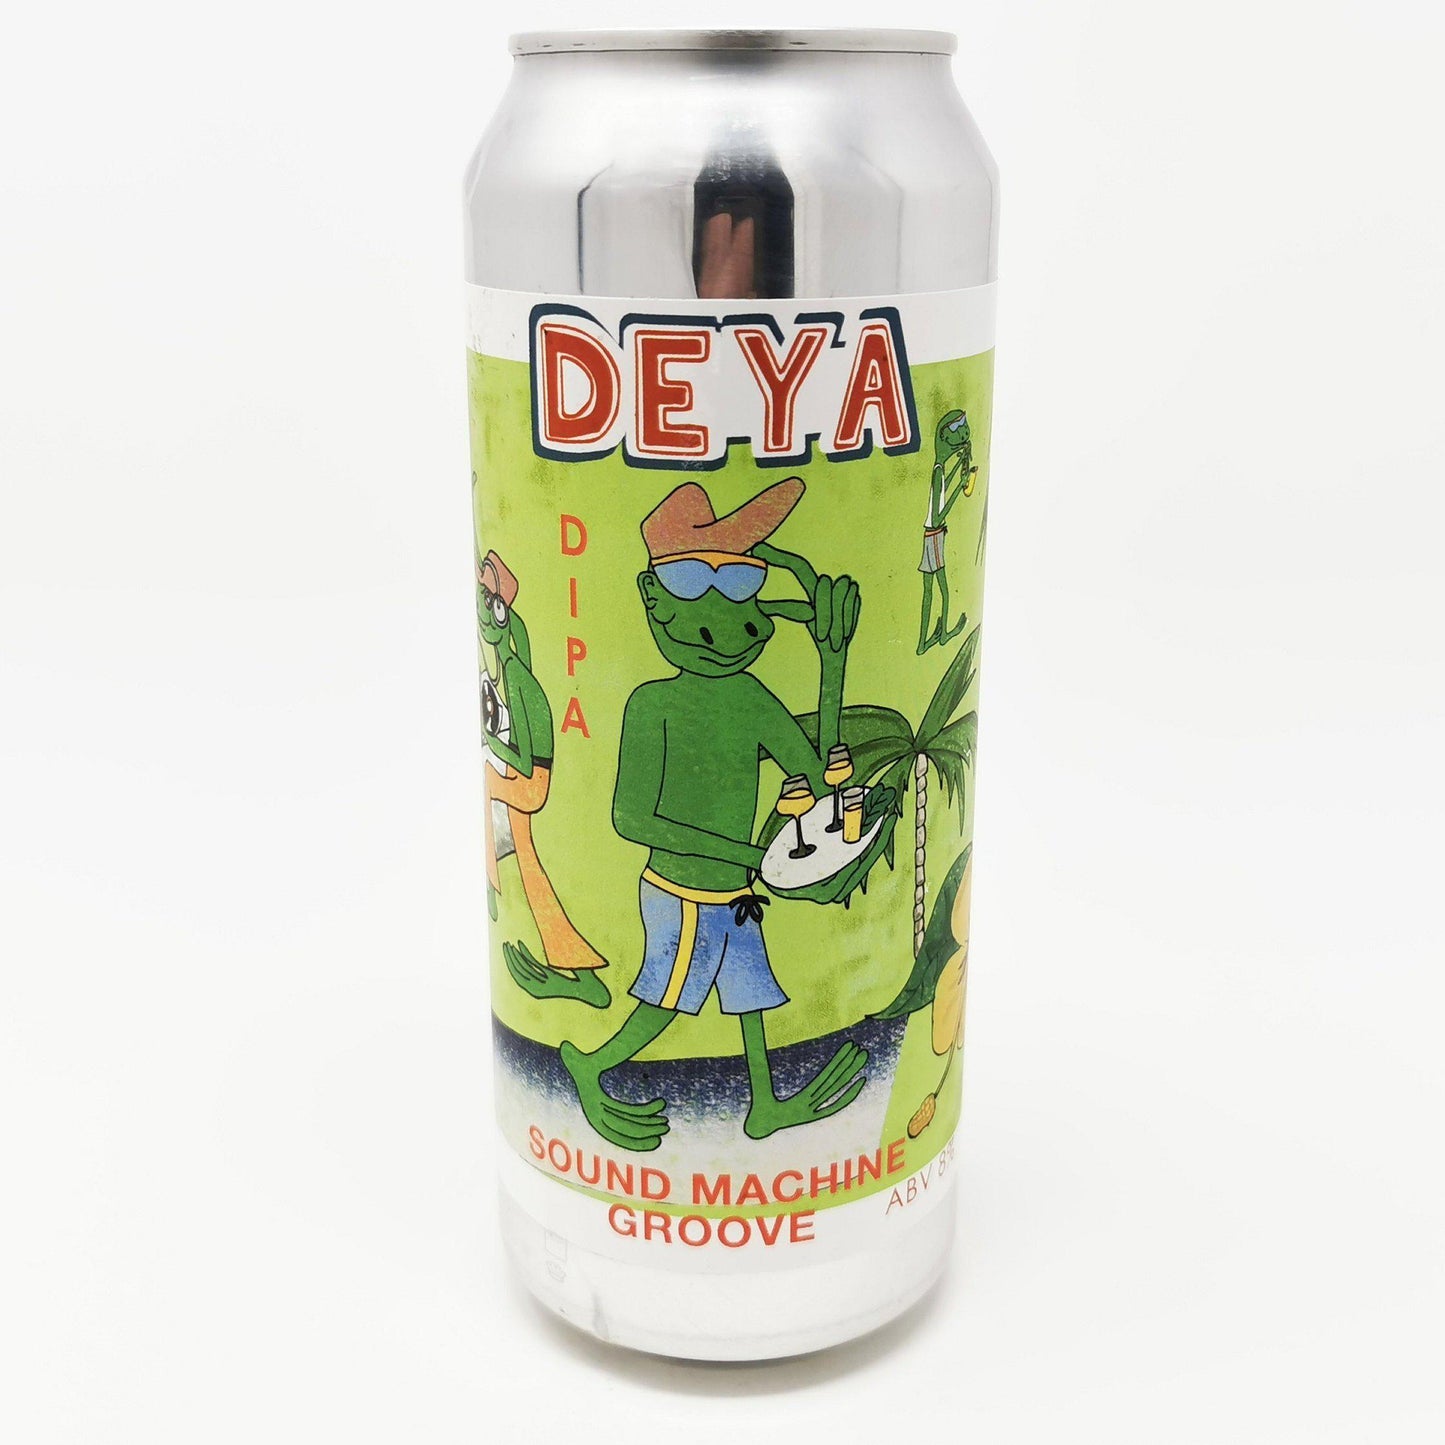 Deya Sound Machine Groove Craft Beer Can Candle Beer Can Candles Adhock Homeware